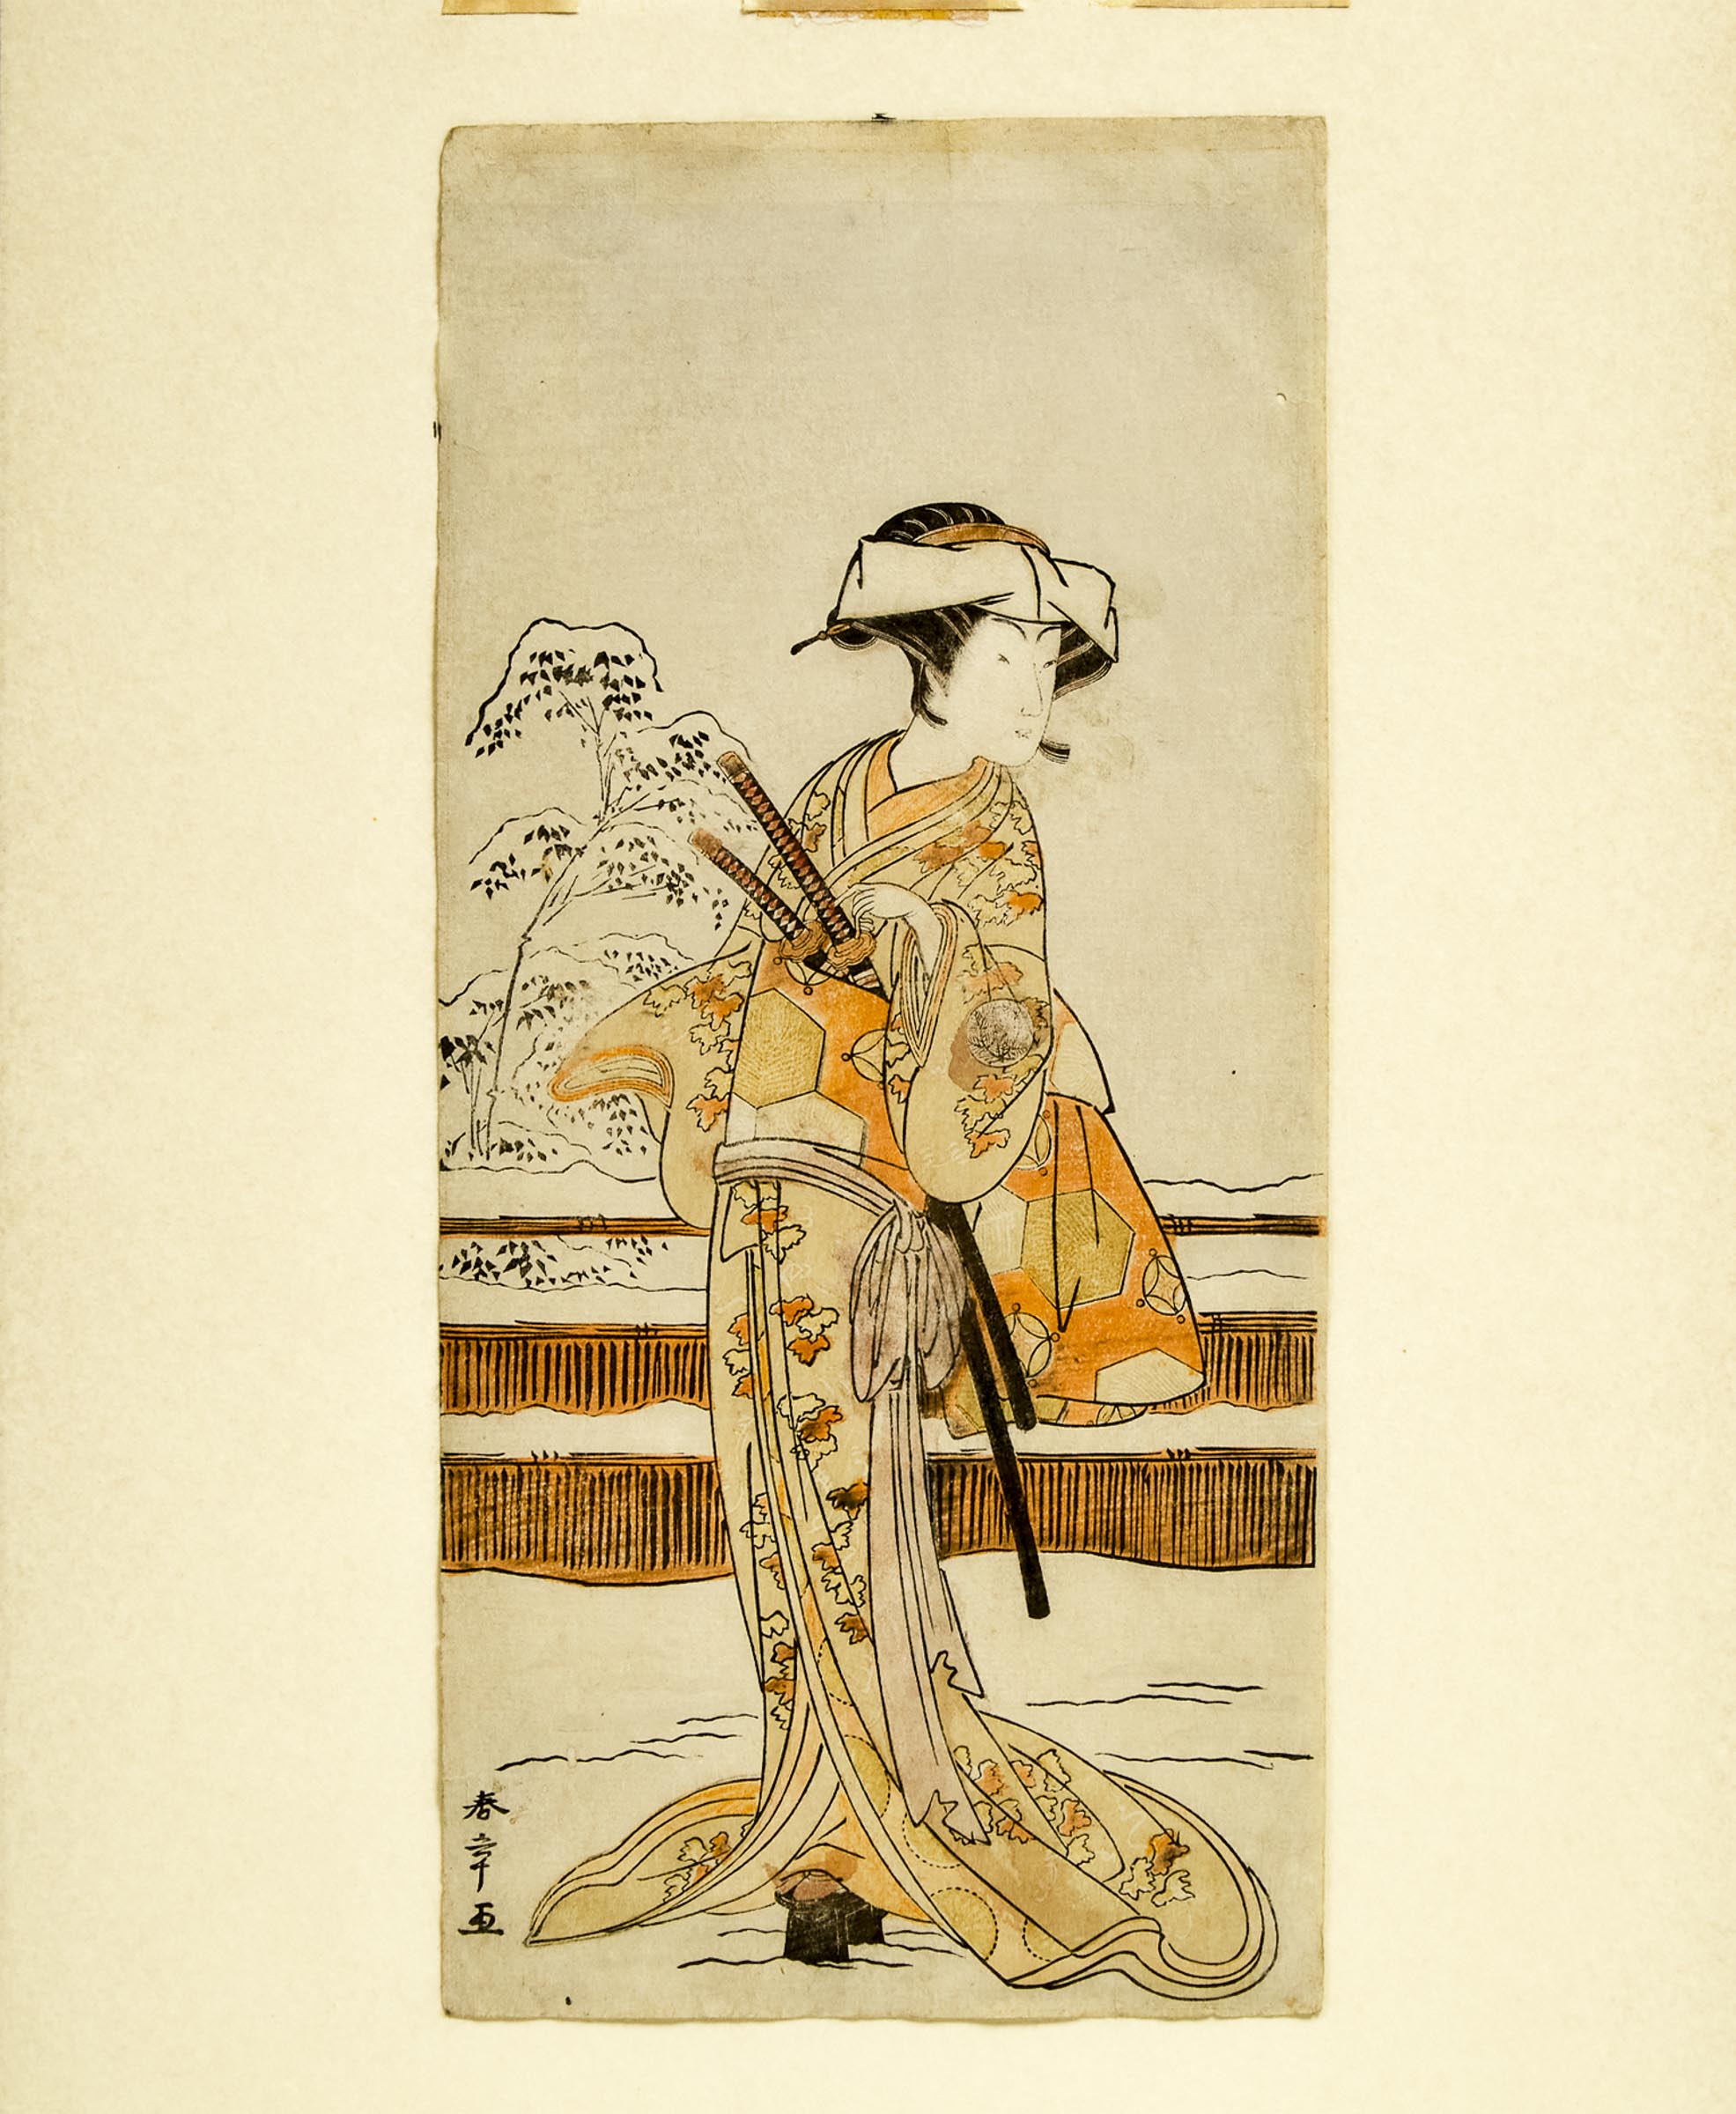 Katsukawa Shunsho (1726-1792) and Katsukawa Shunko (1743-1812), Two Actor Woodblock Prints